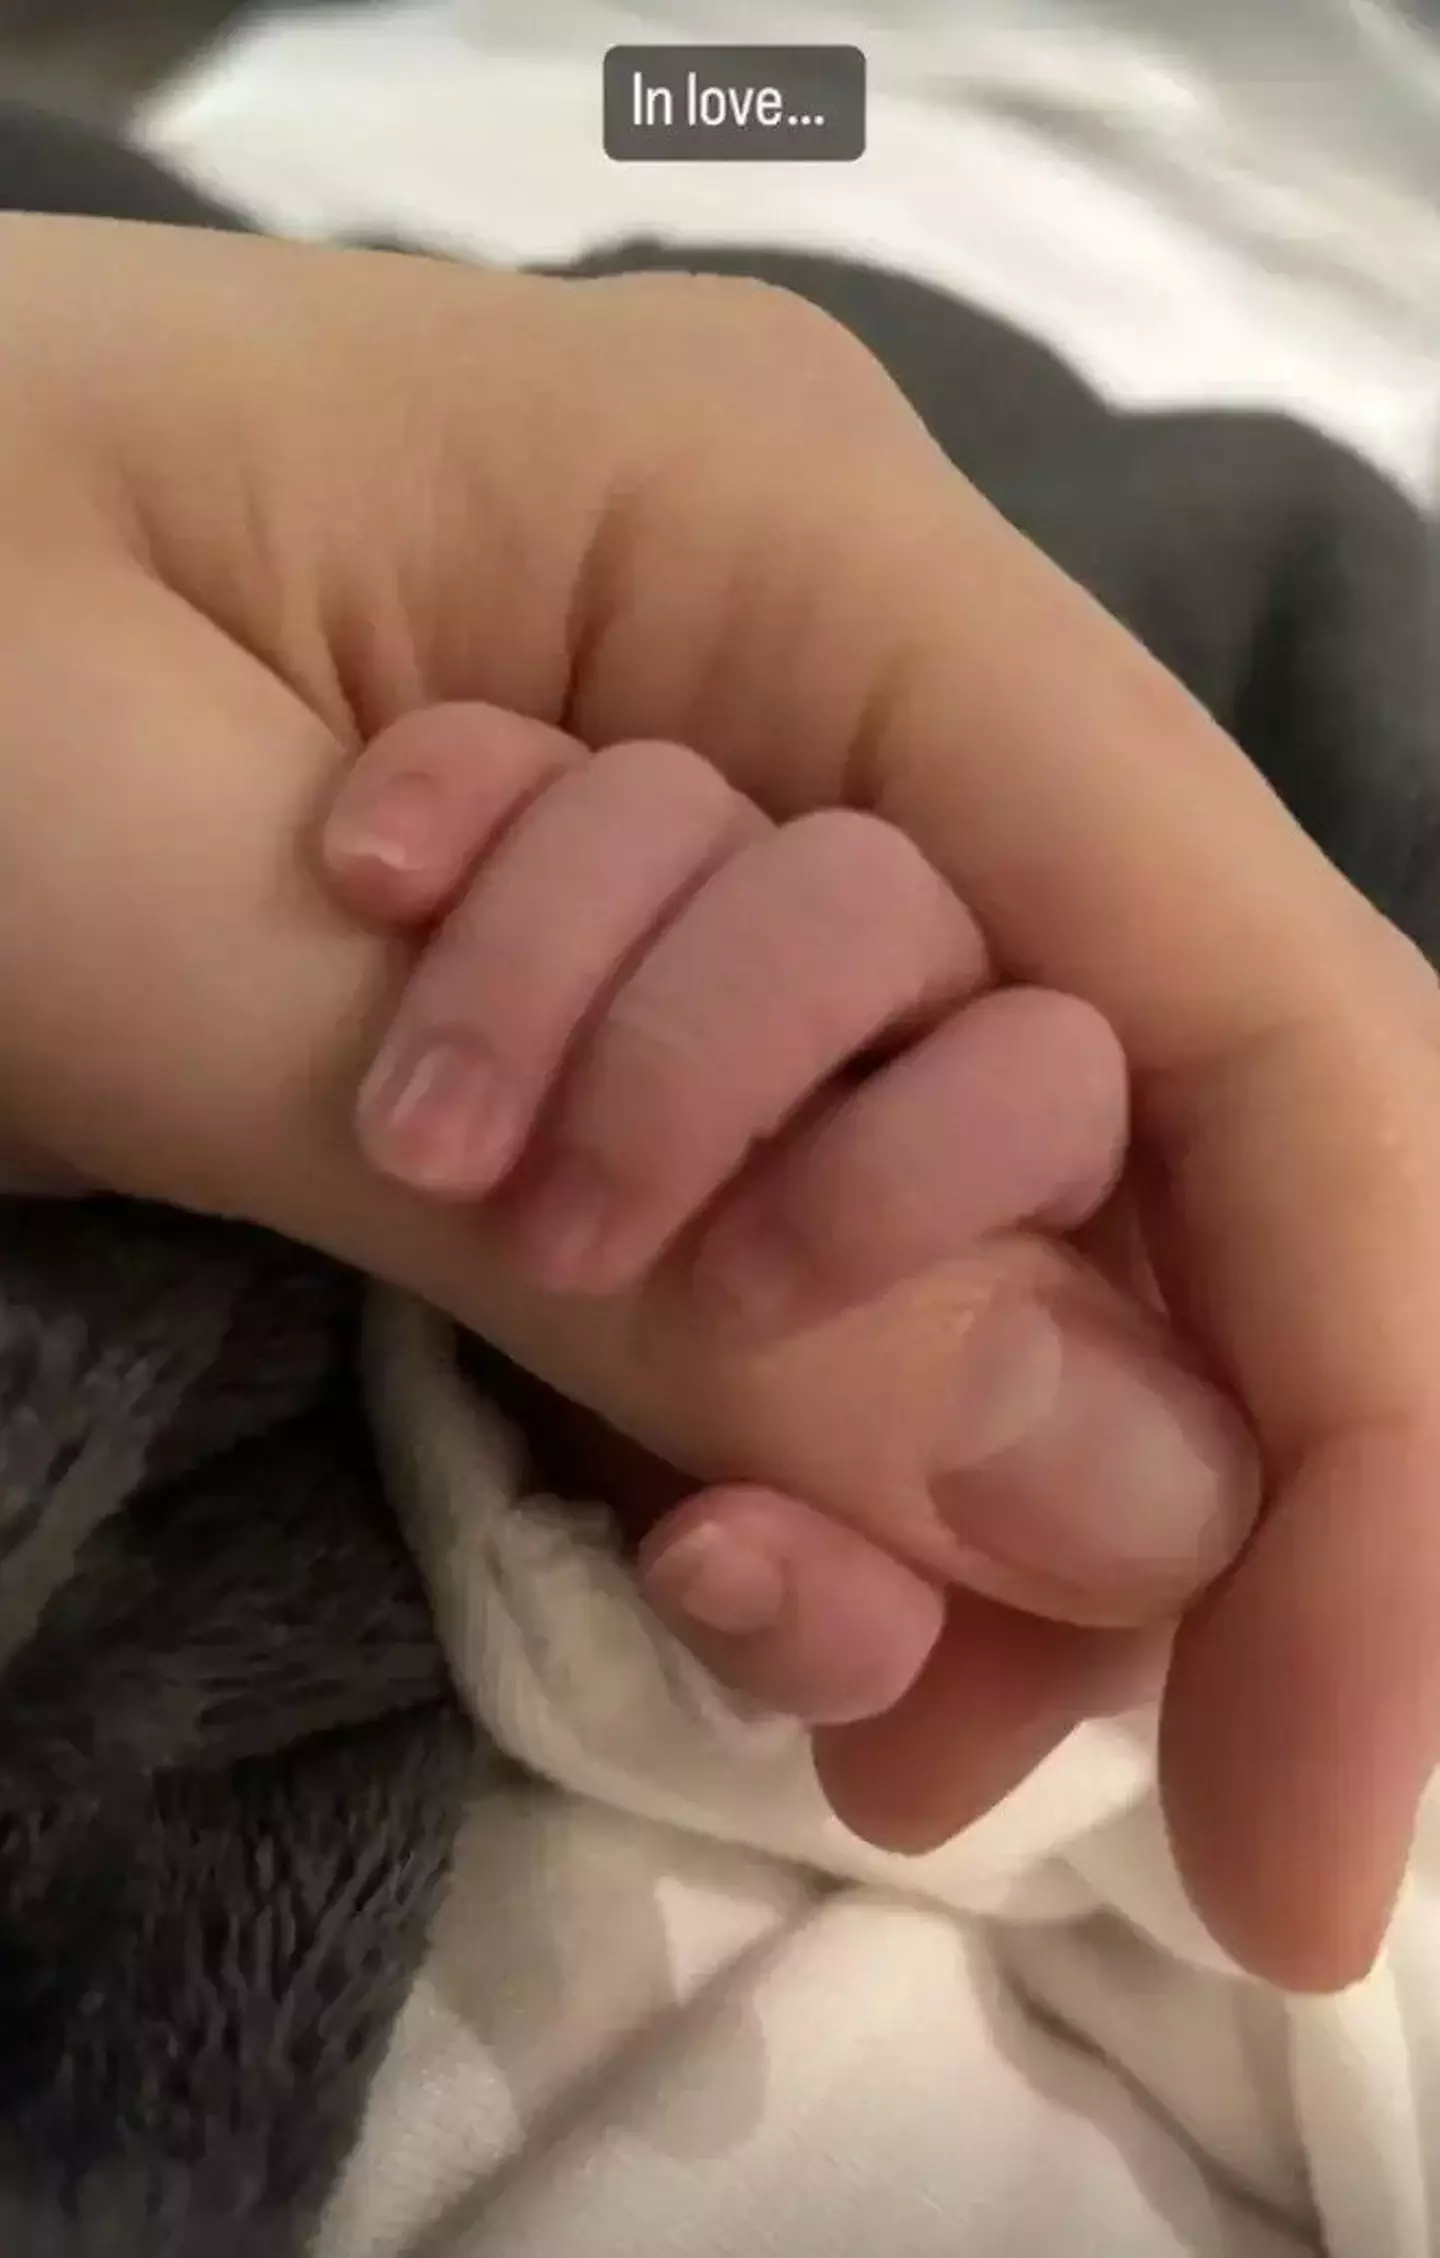 Jessie J welcomed a baby boy earlier last month.